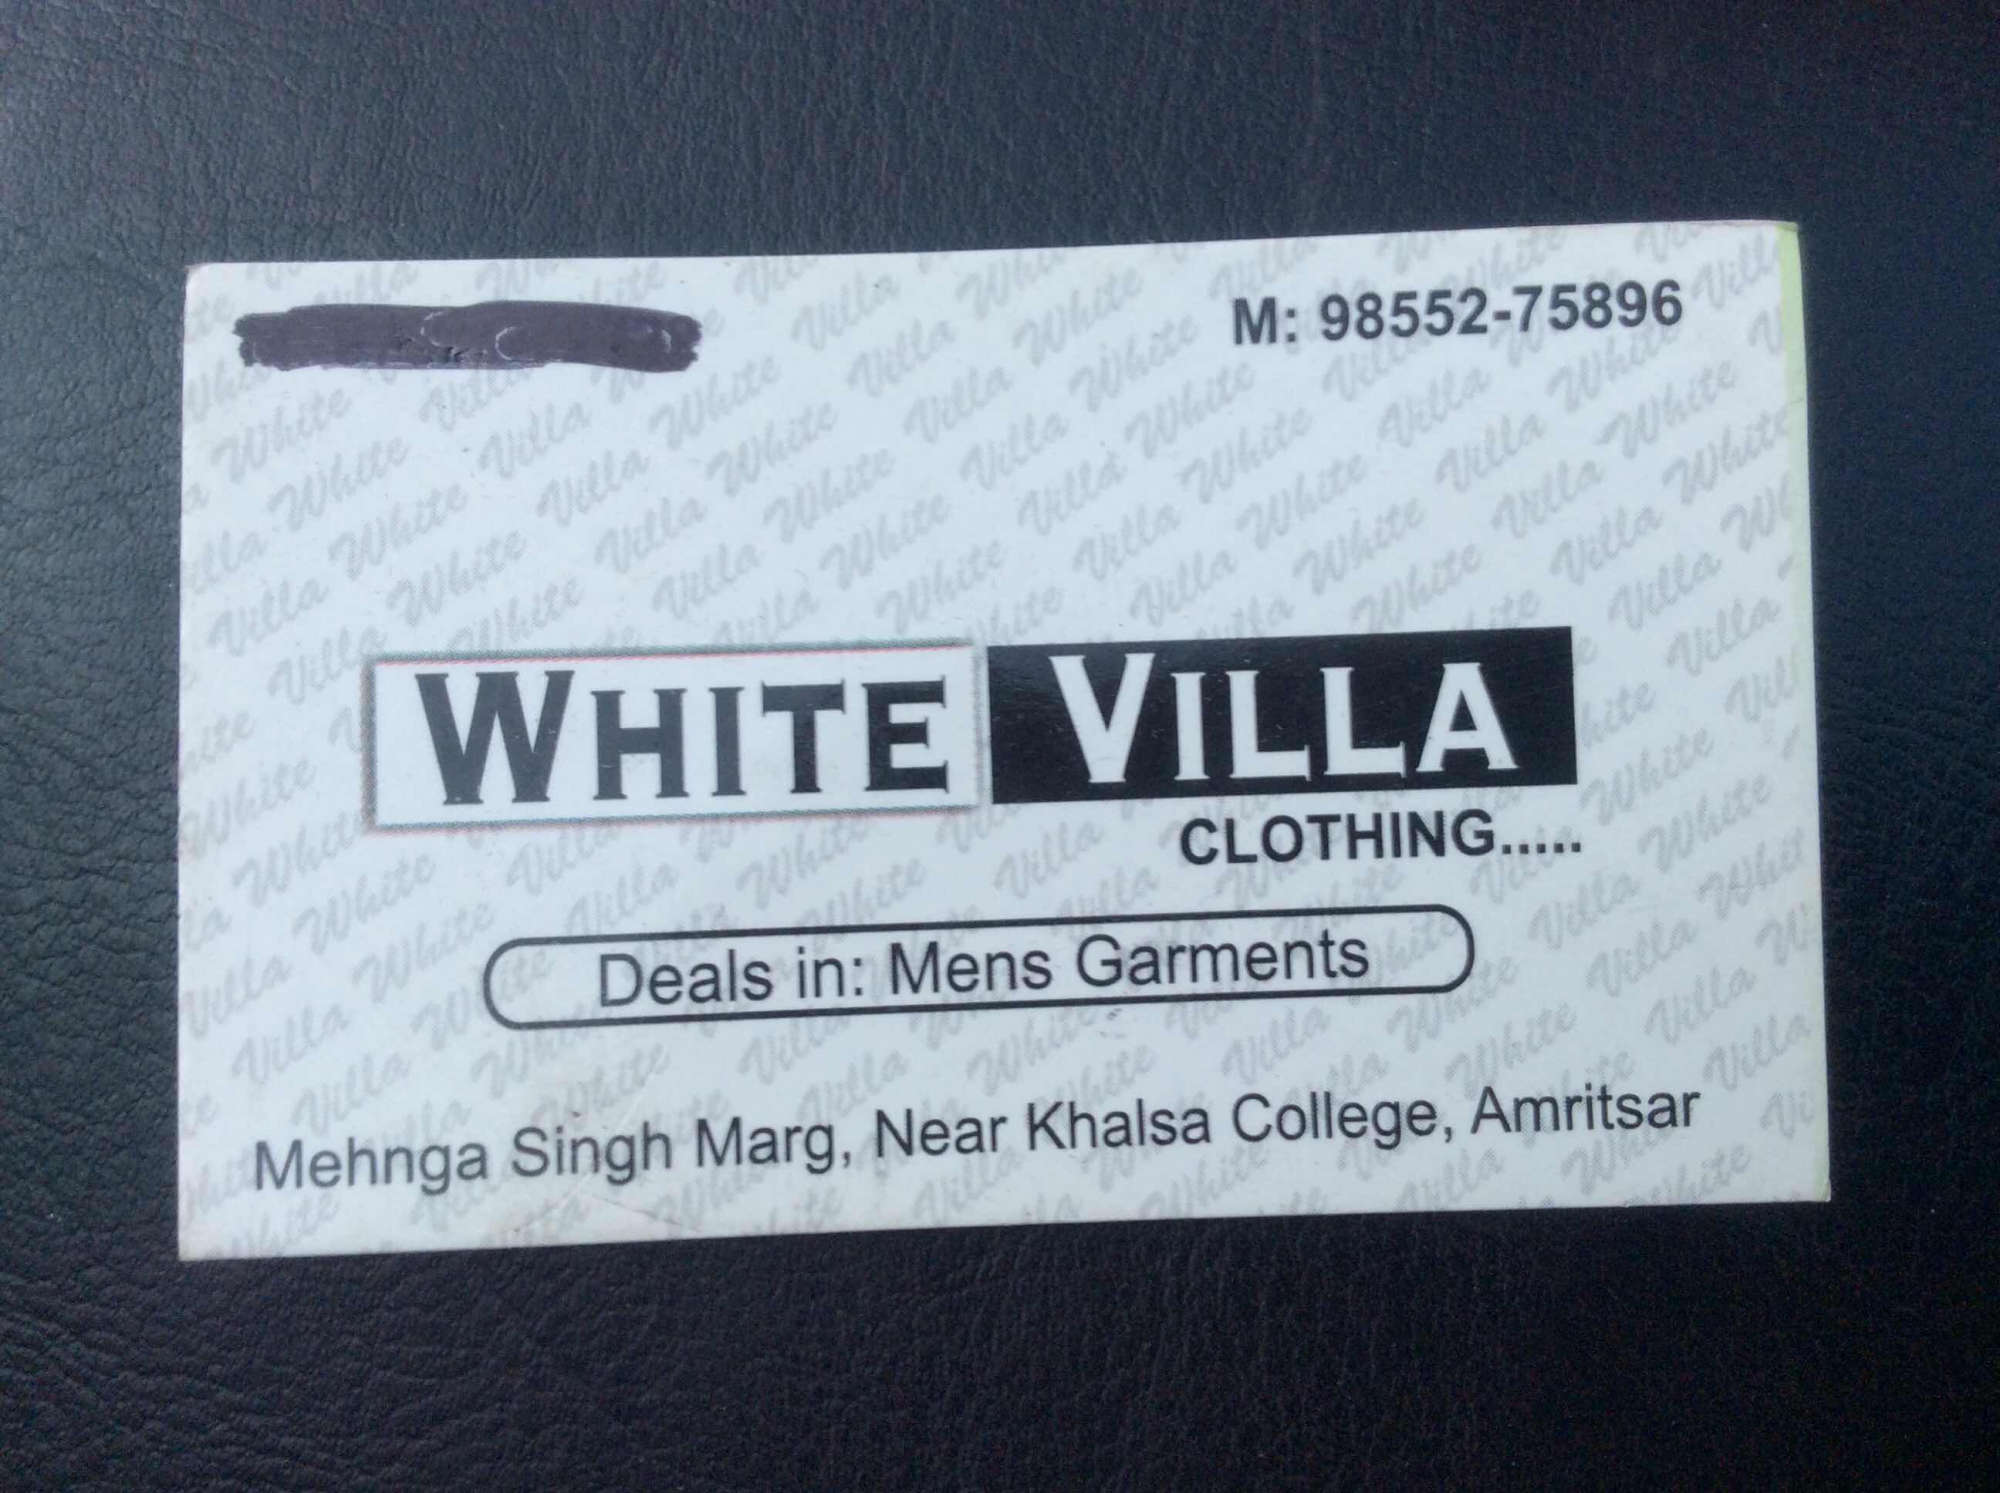 Villa Clothing Logo - White Villa Clothing Photos, , Amritsar- Pictures & Images Gallery ...